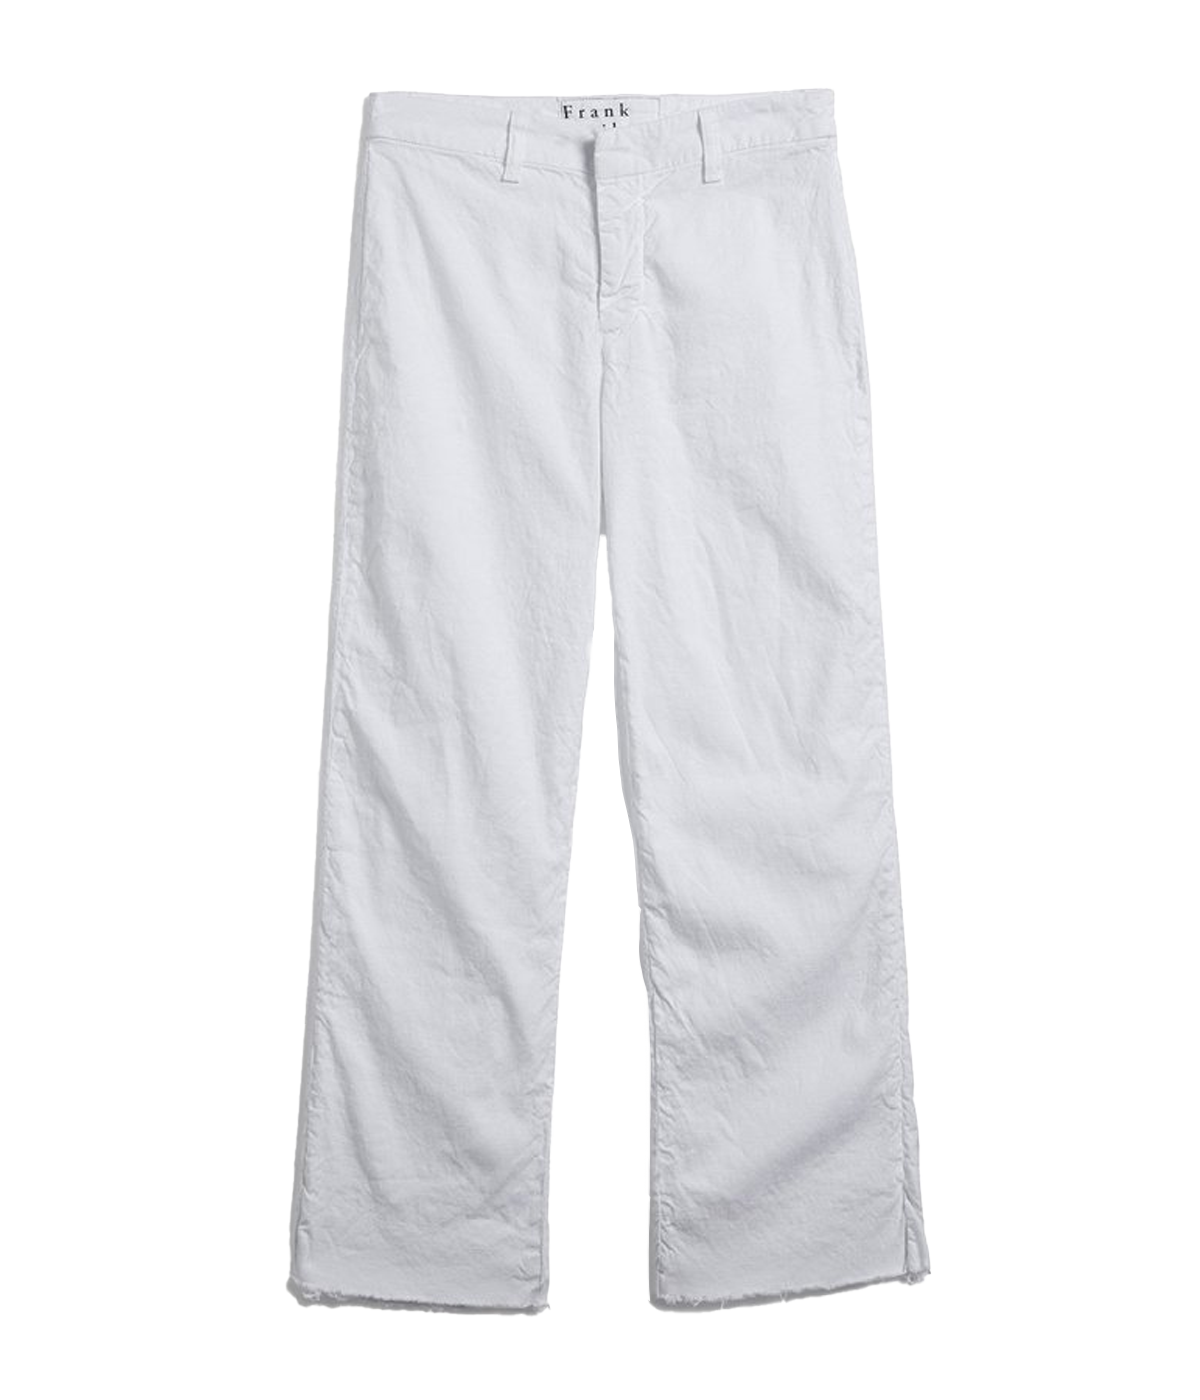 Kinsale Trouser in White Italian Performance Linen